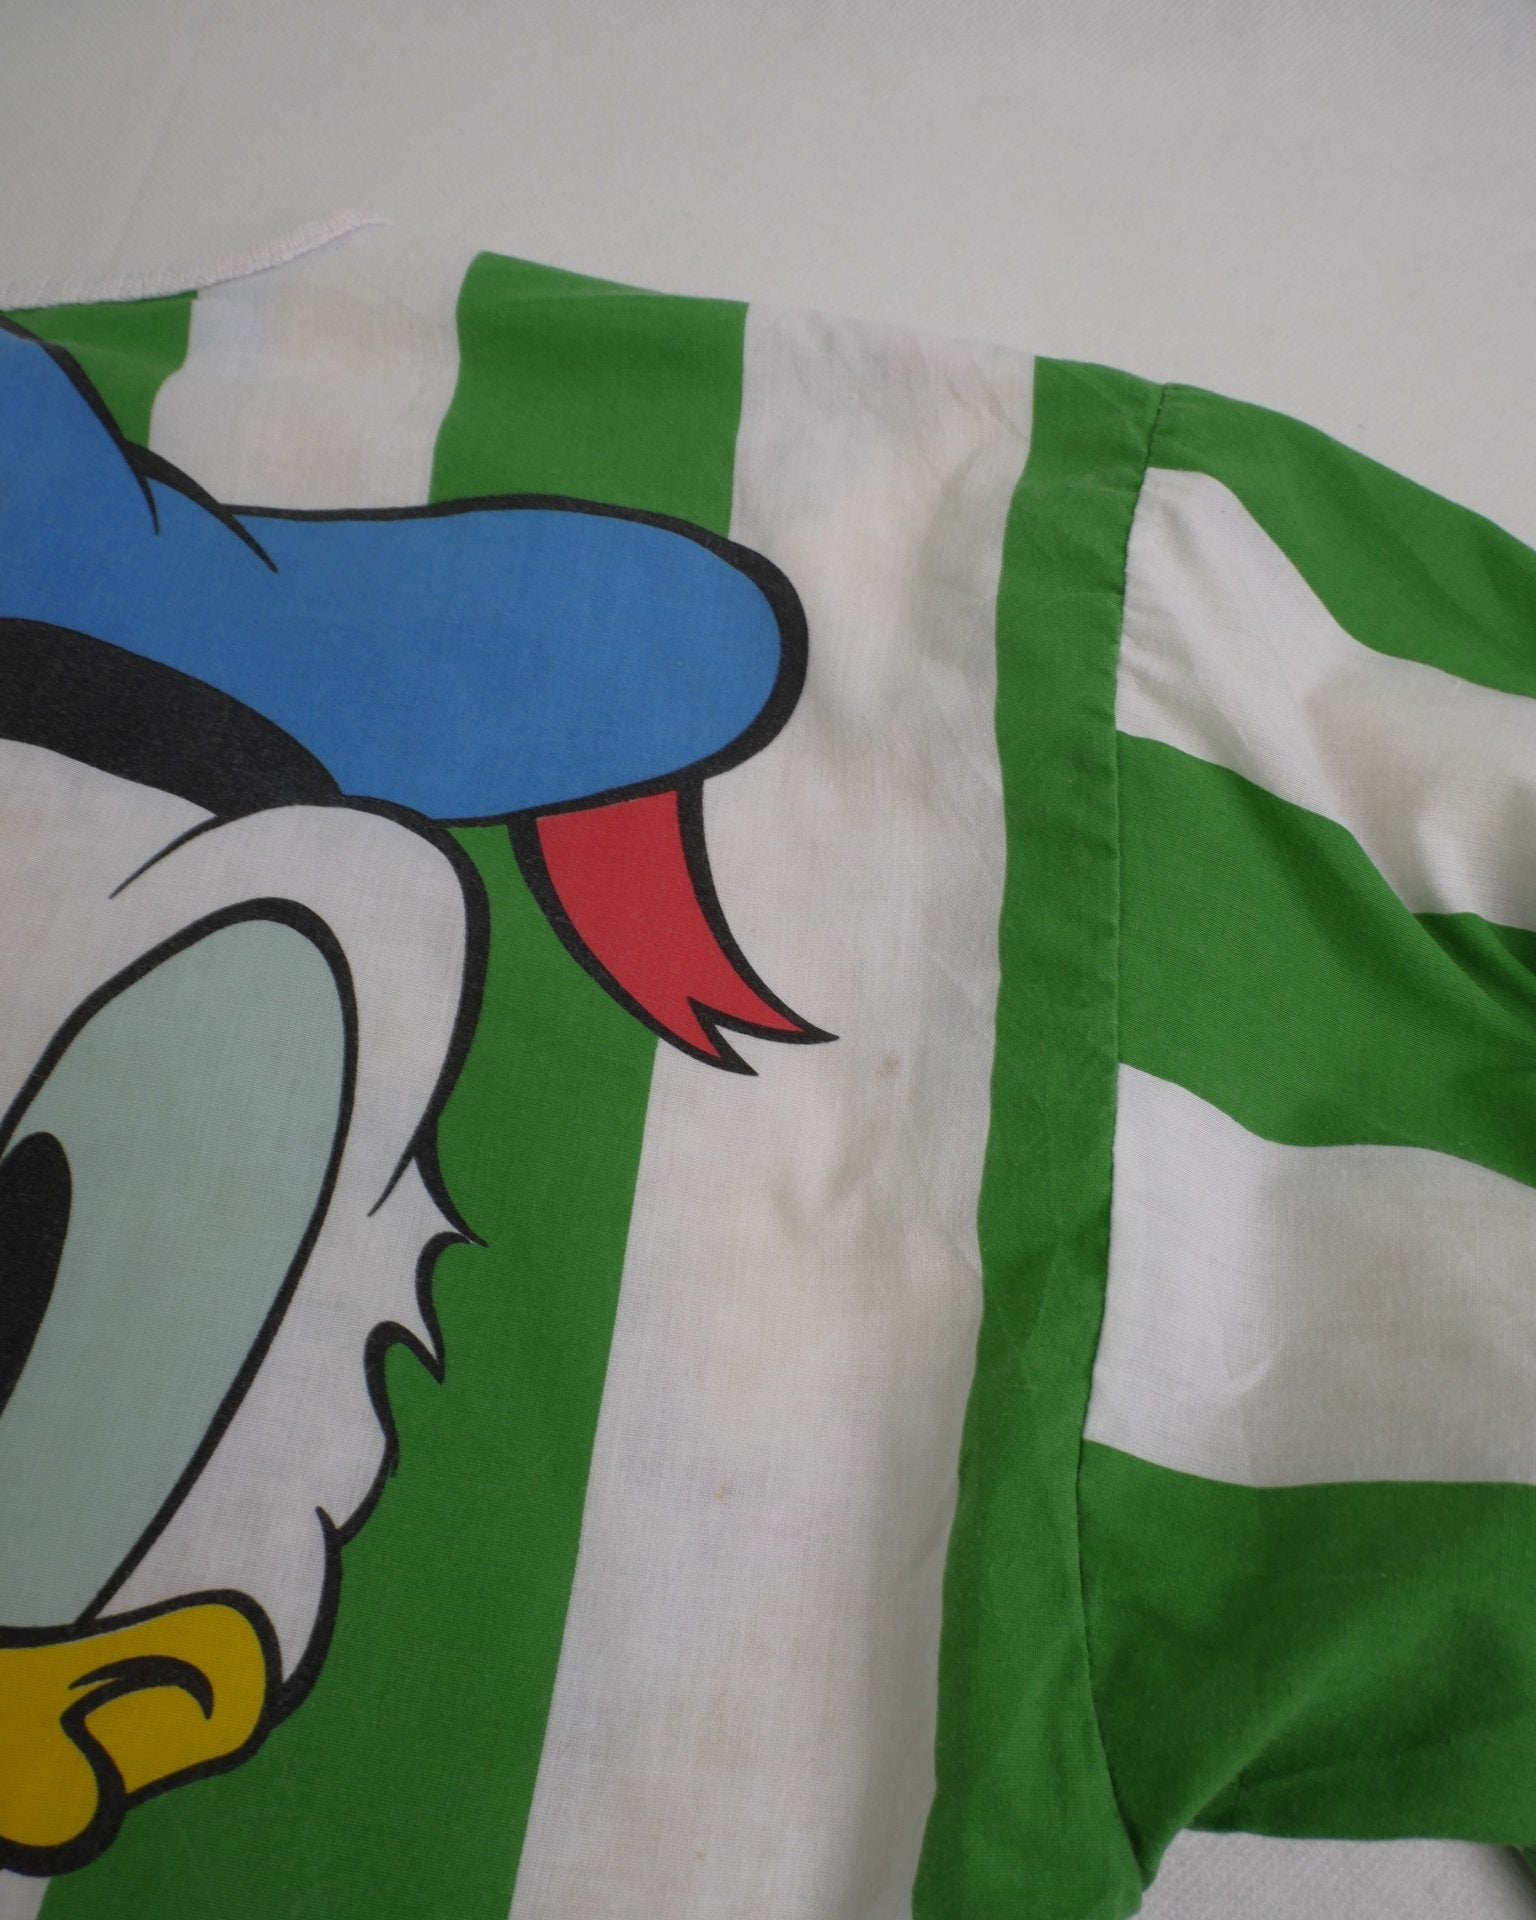 Disney 'Donald und Daisy' printed Graphic Sweater - Peeces